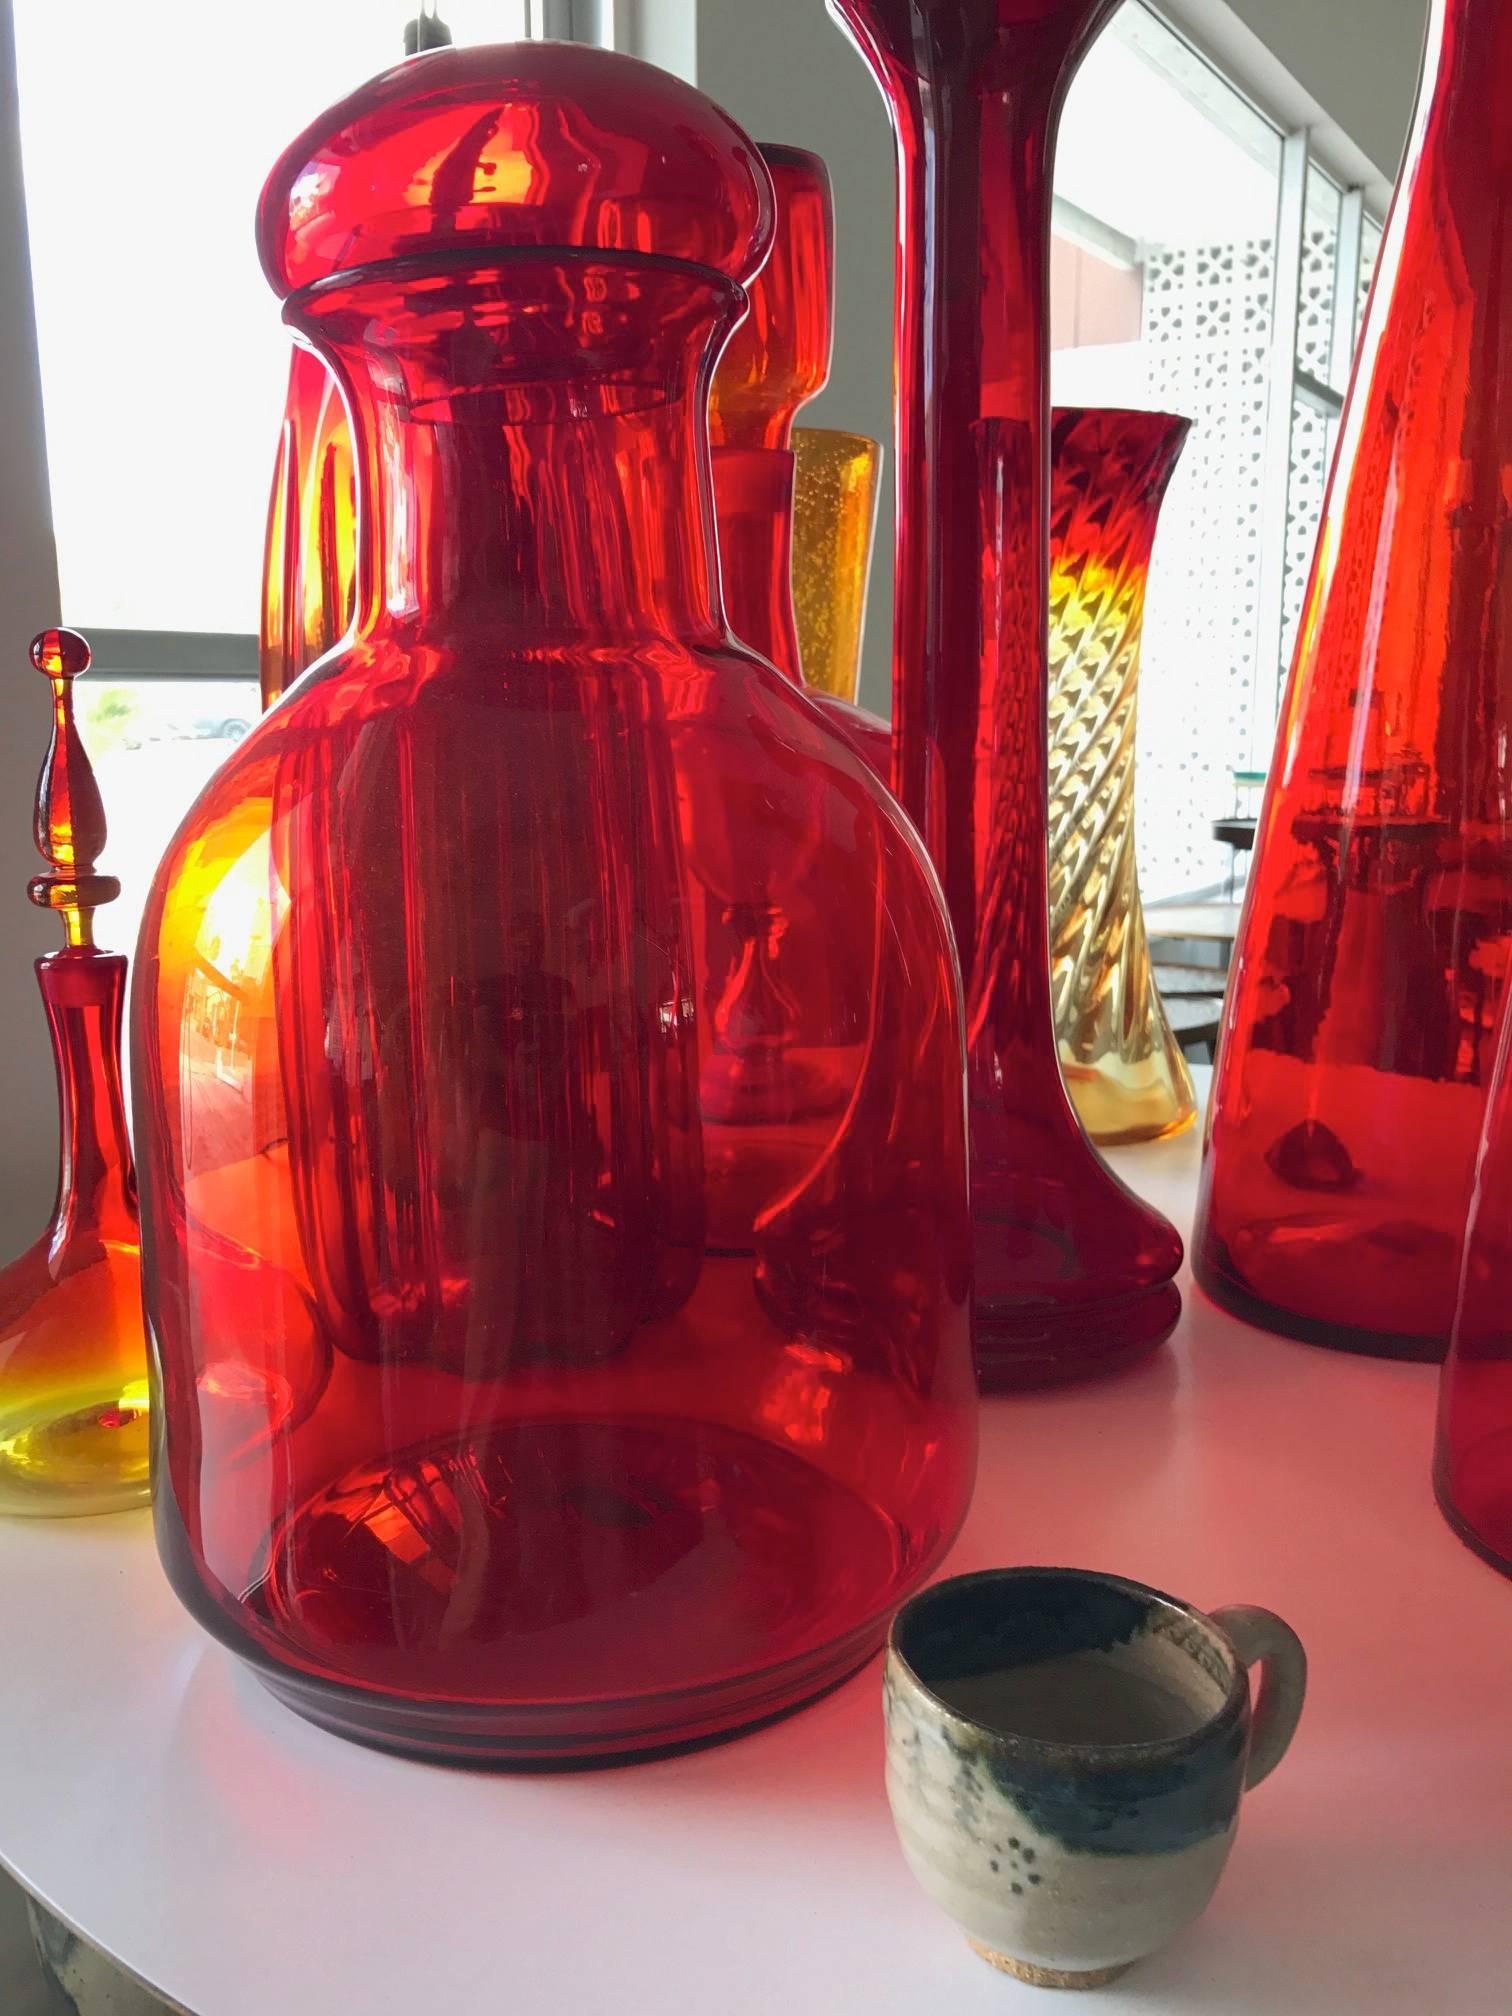 Américain The Collective of Large Blenko Glass Pieces (Collection de grandes pièces en verre de Blenko) en vente